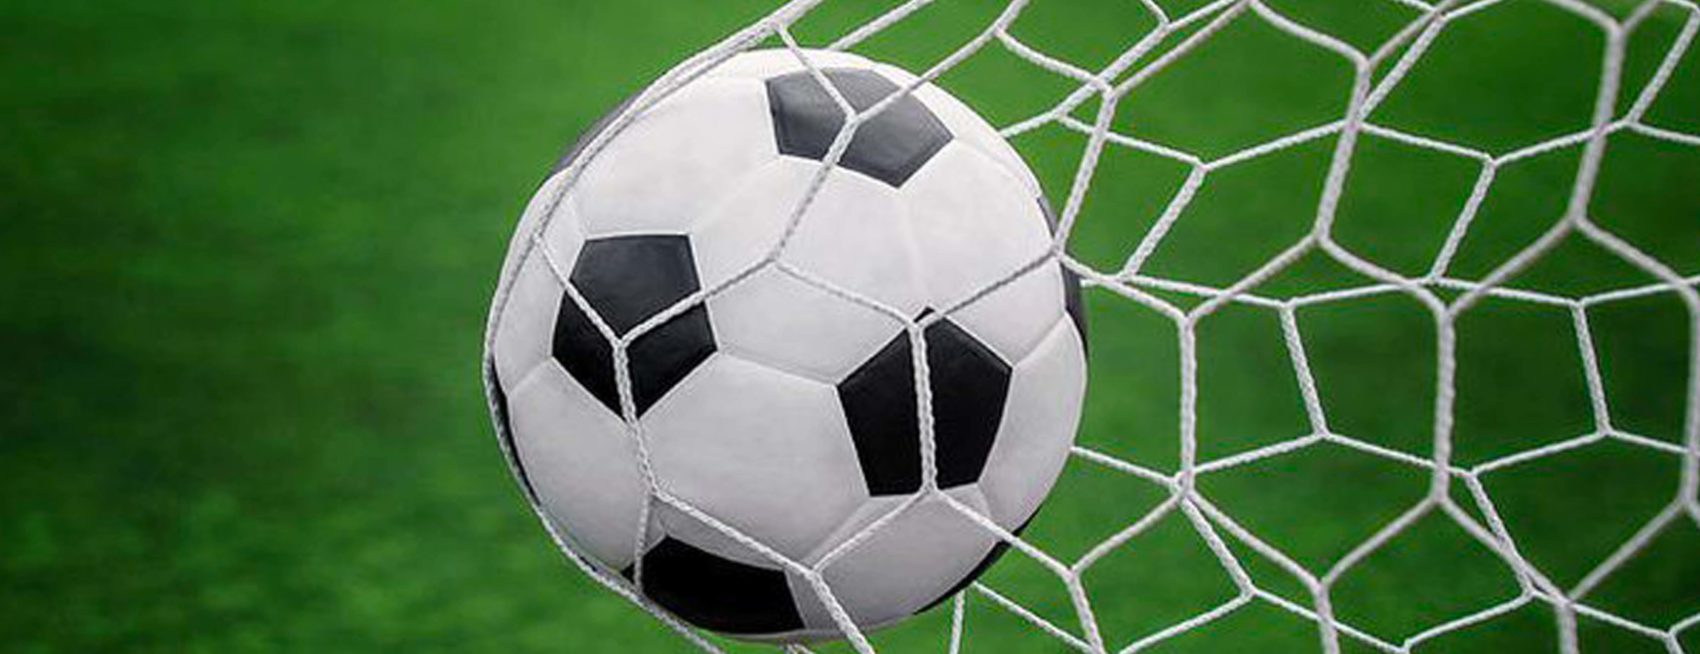 Whitehall, Fruitport battle to scoreless draw in non-league soccer match